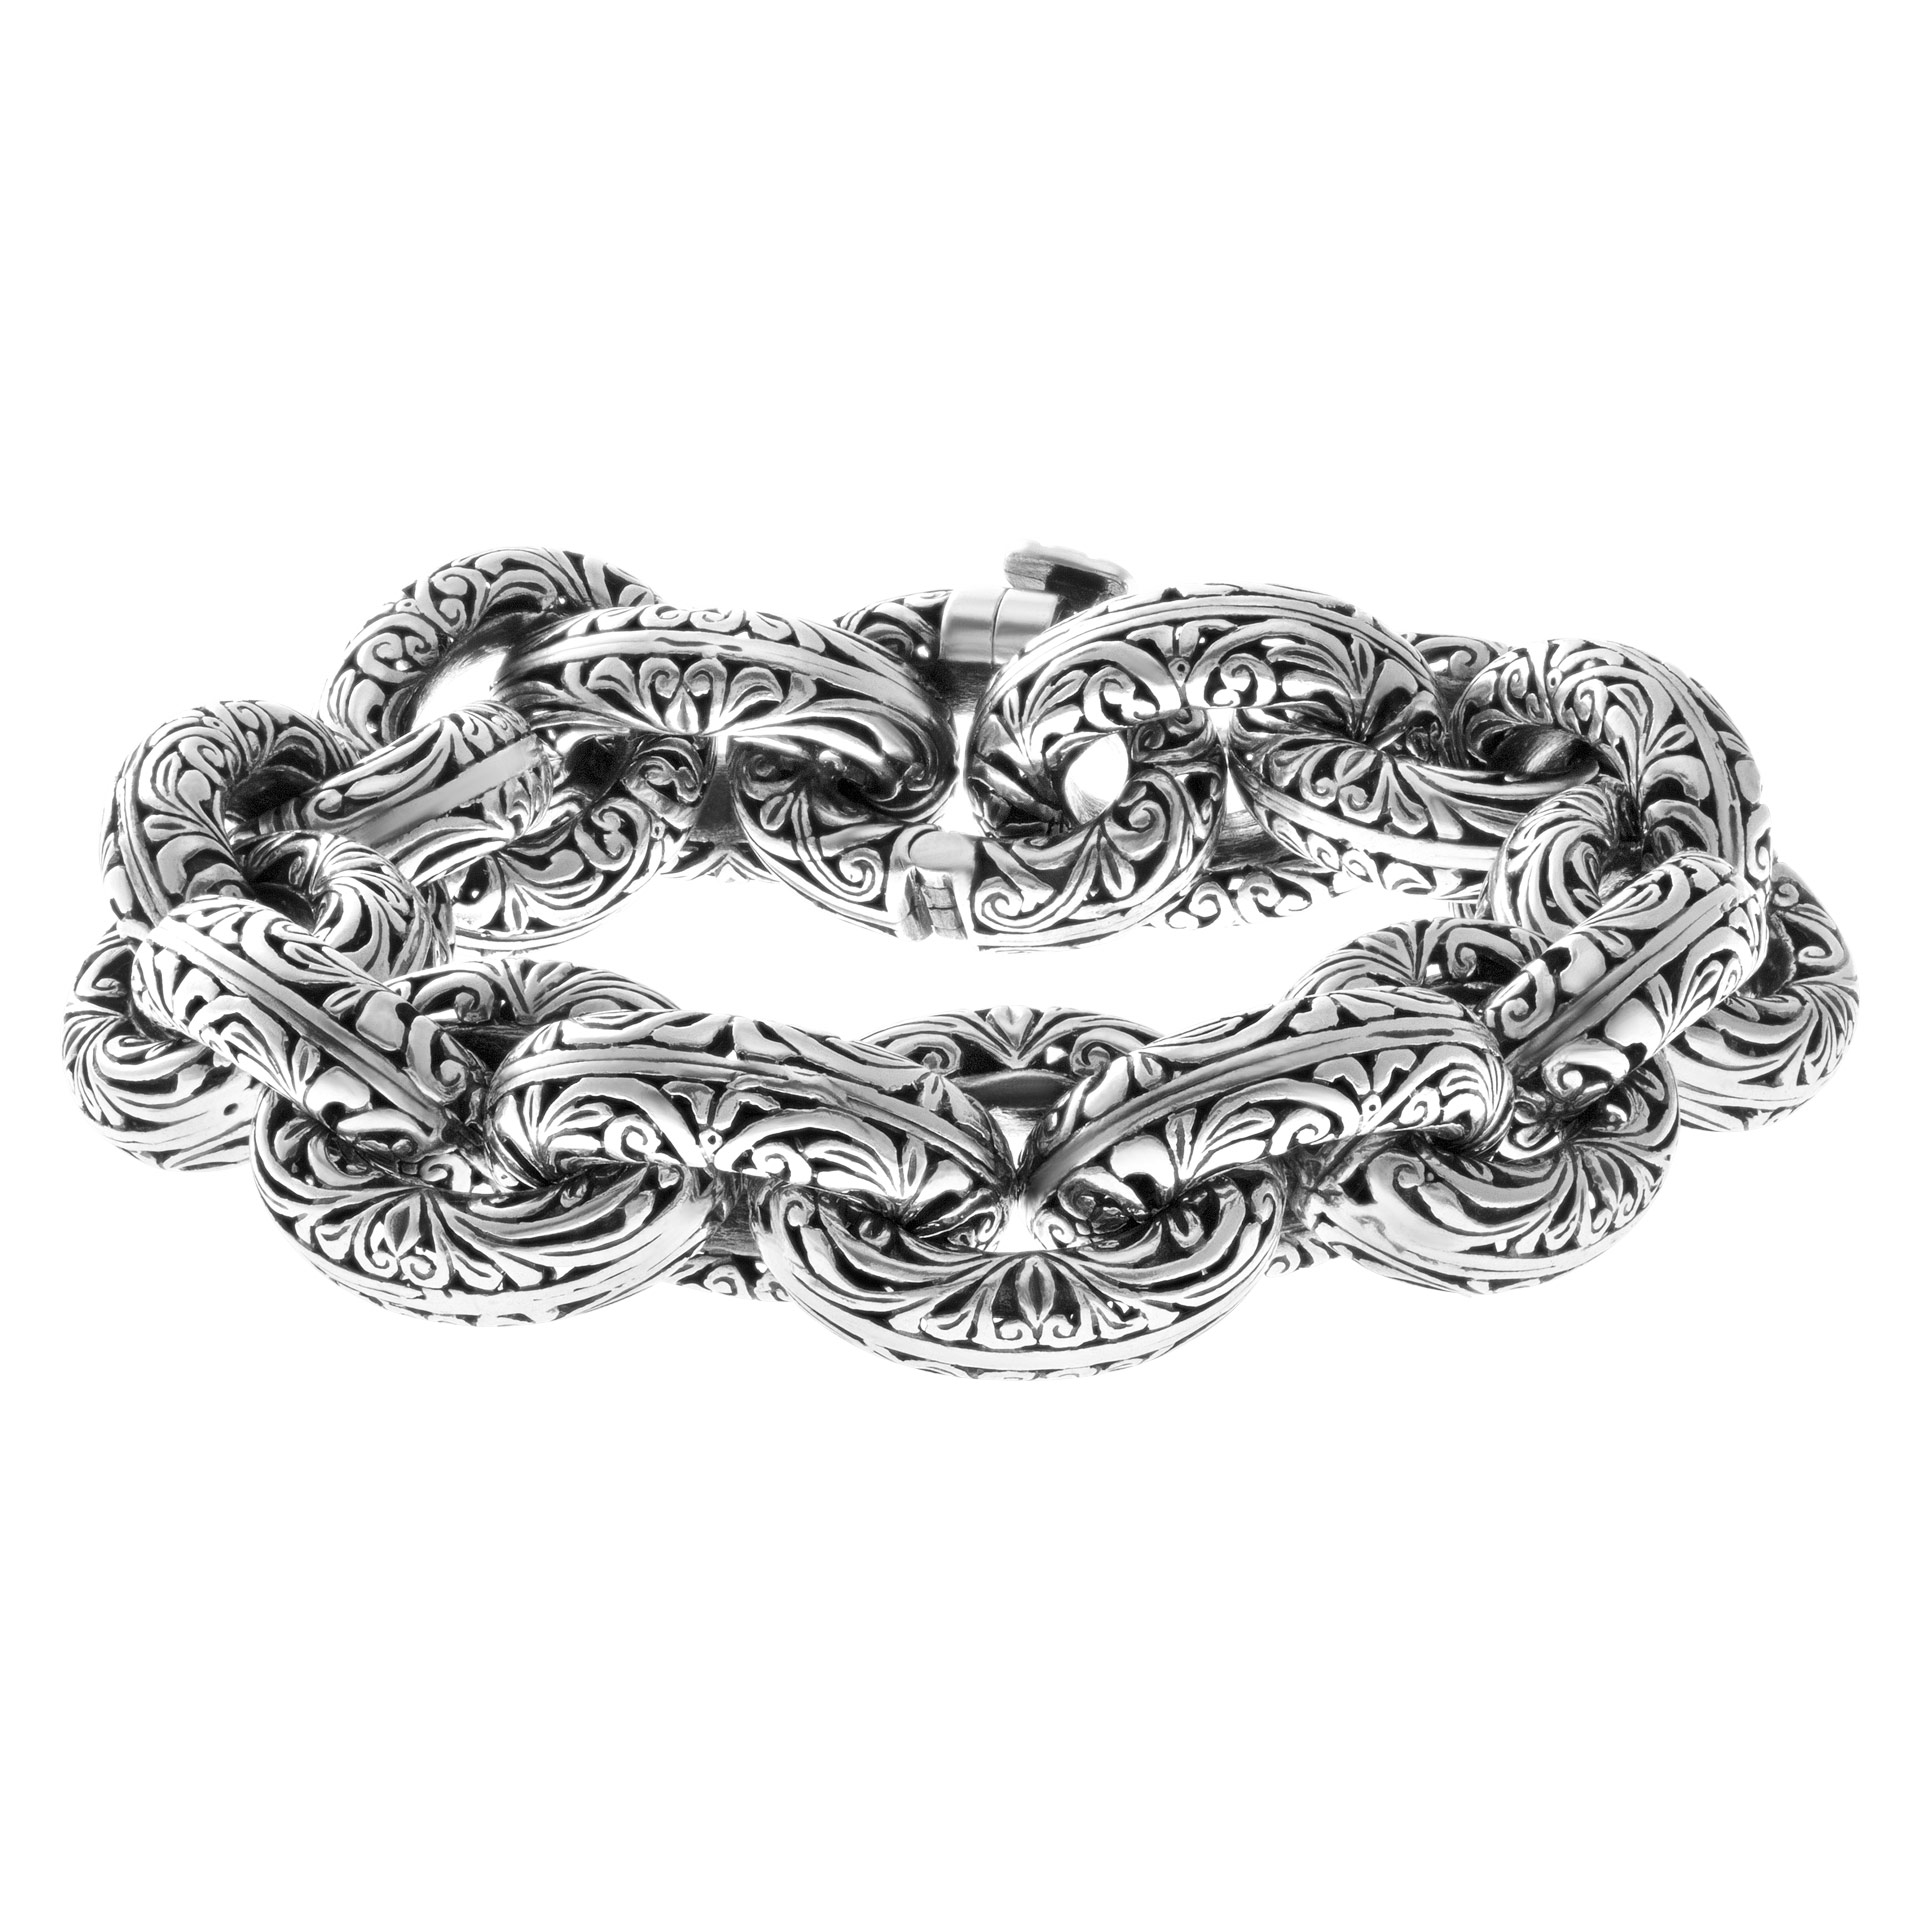 Konstantino Chunky link bracelet in sterling silver